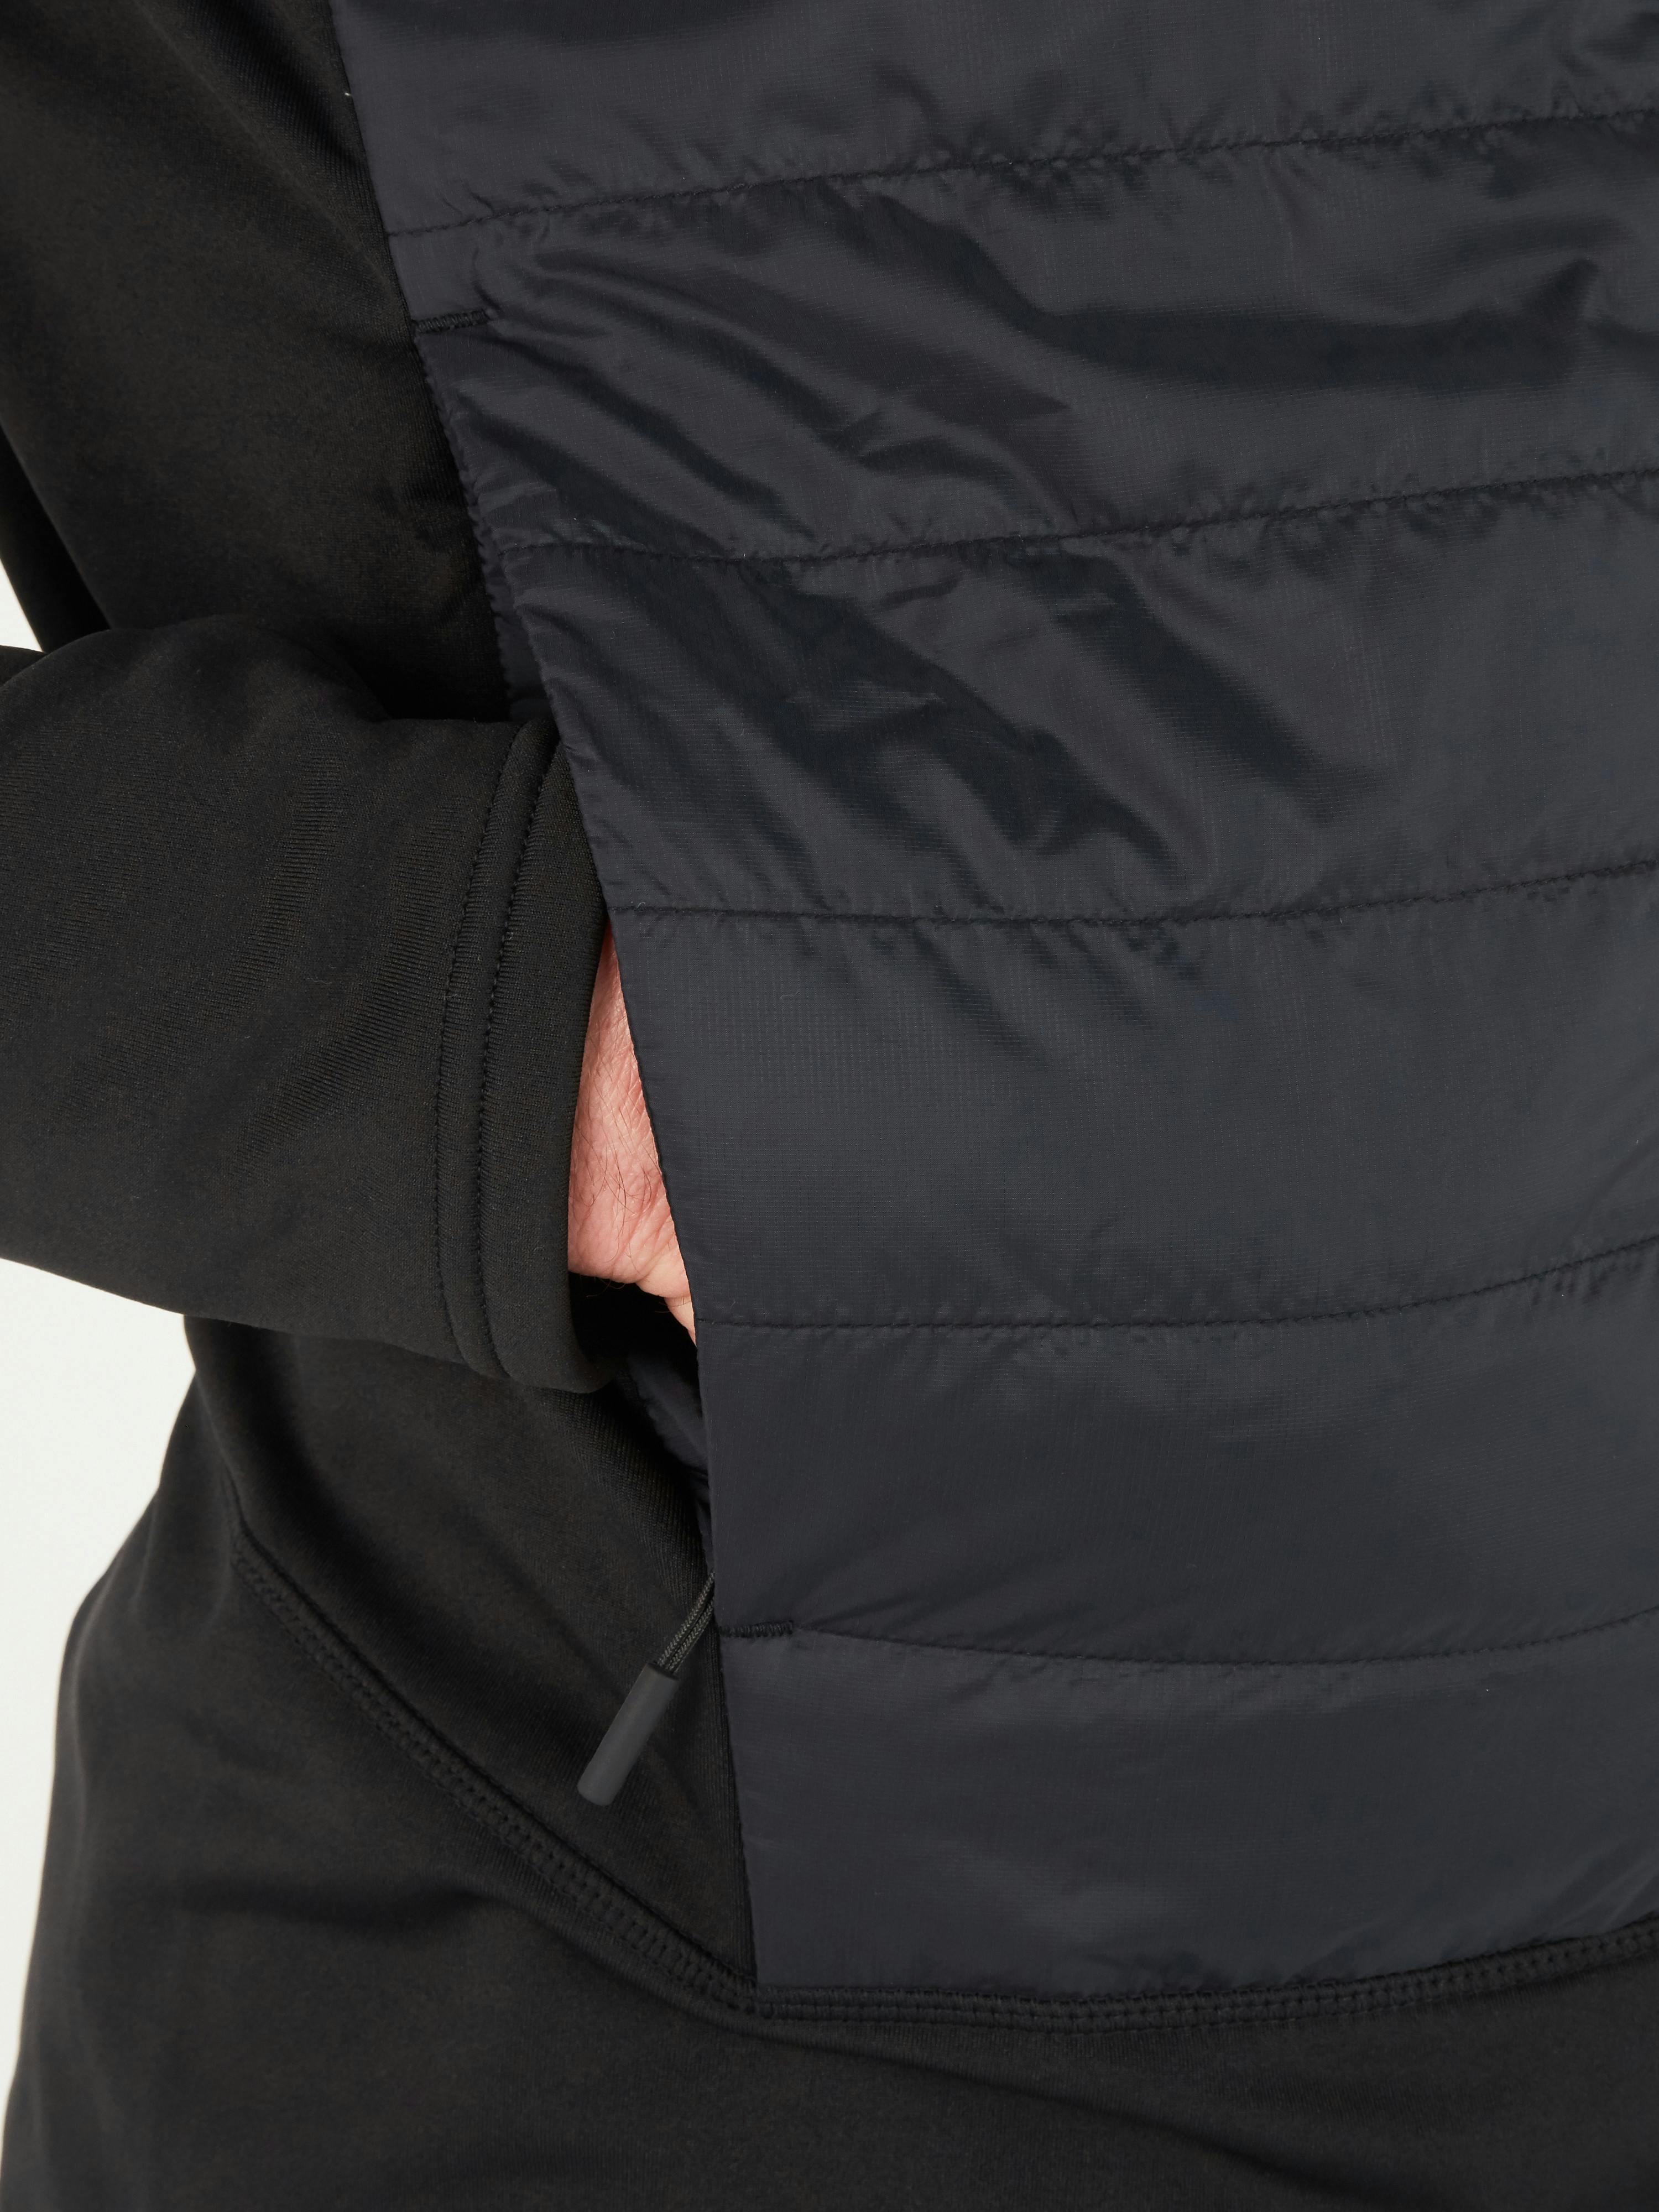 Marmot Men's Variant Hybrid Jacket